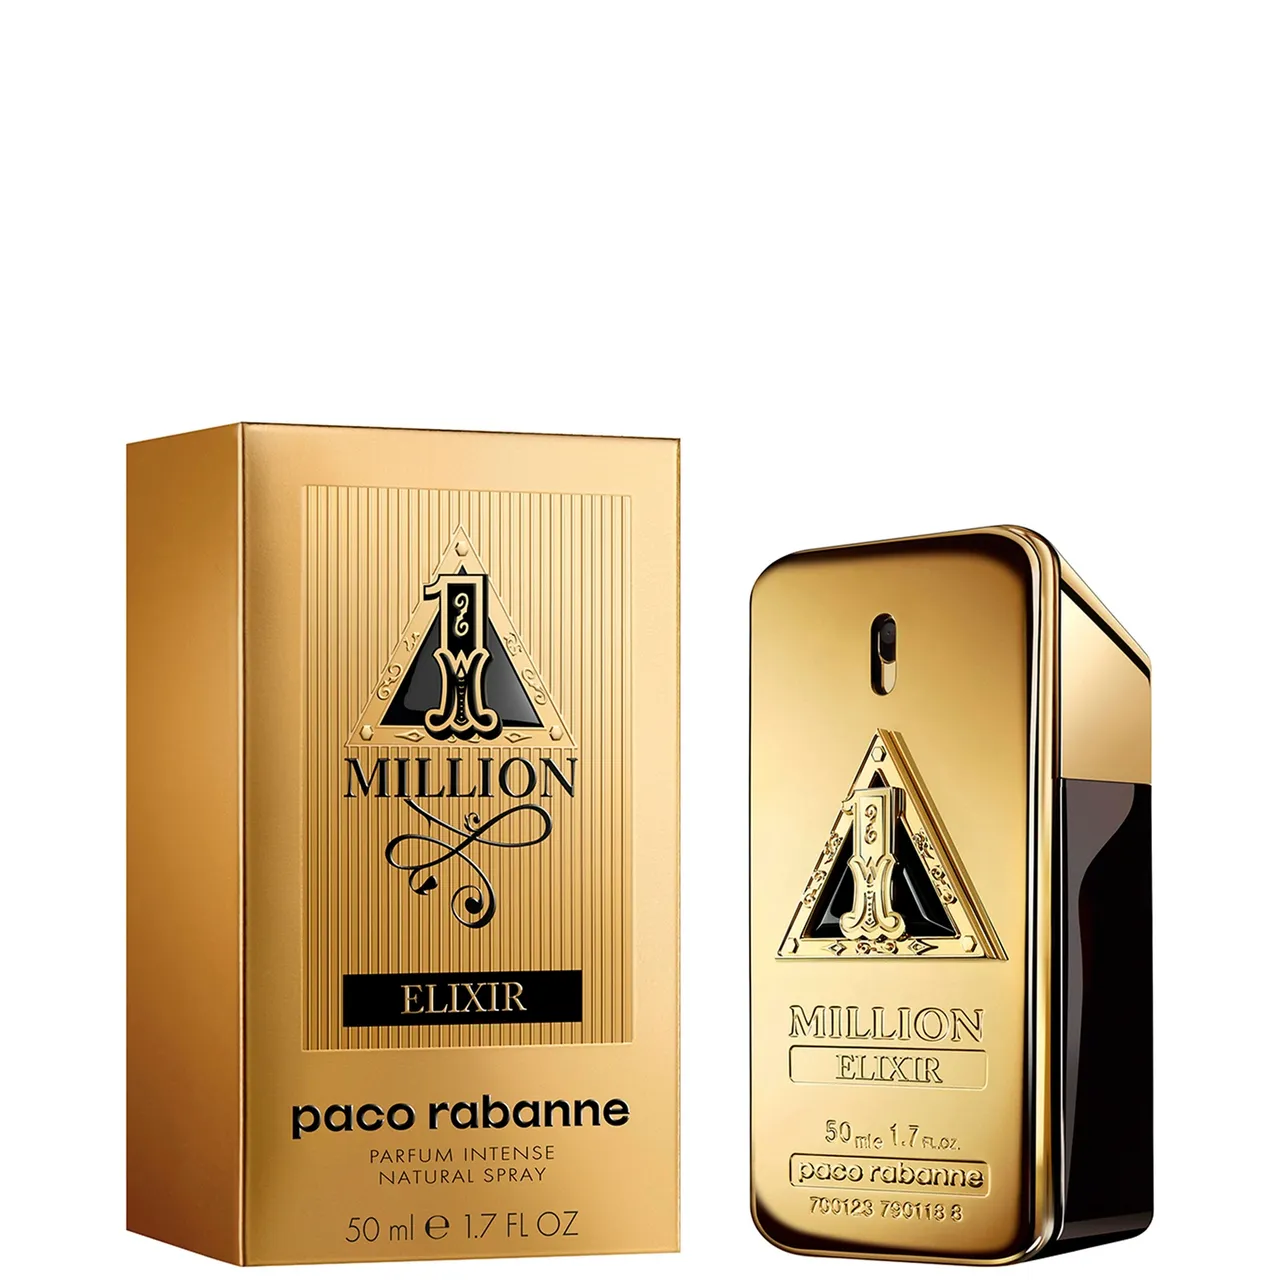 Rabanne 1 Million Elixir Parfum Intense 50ml